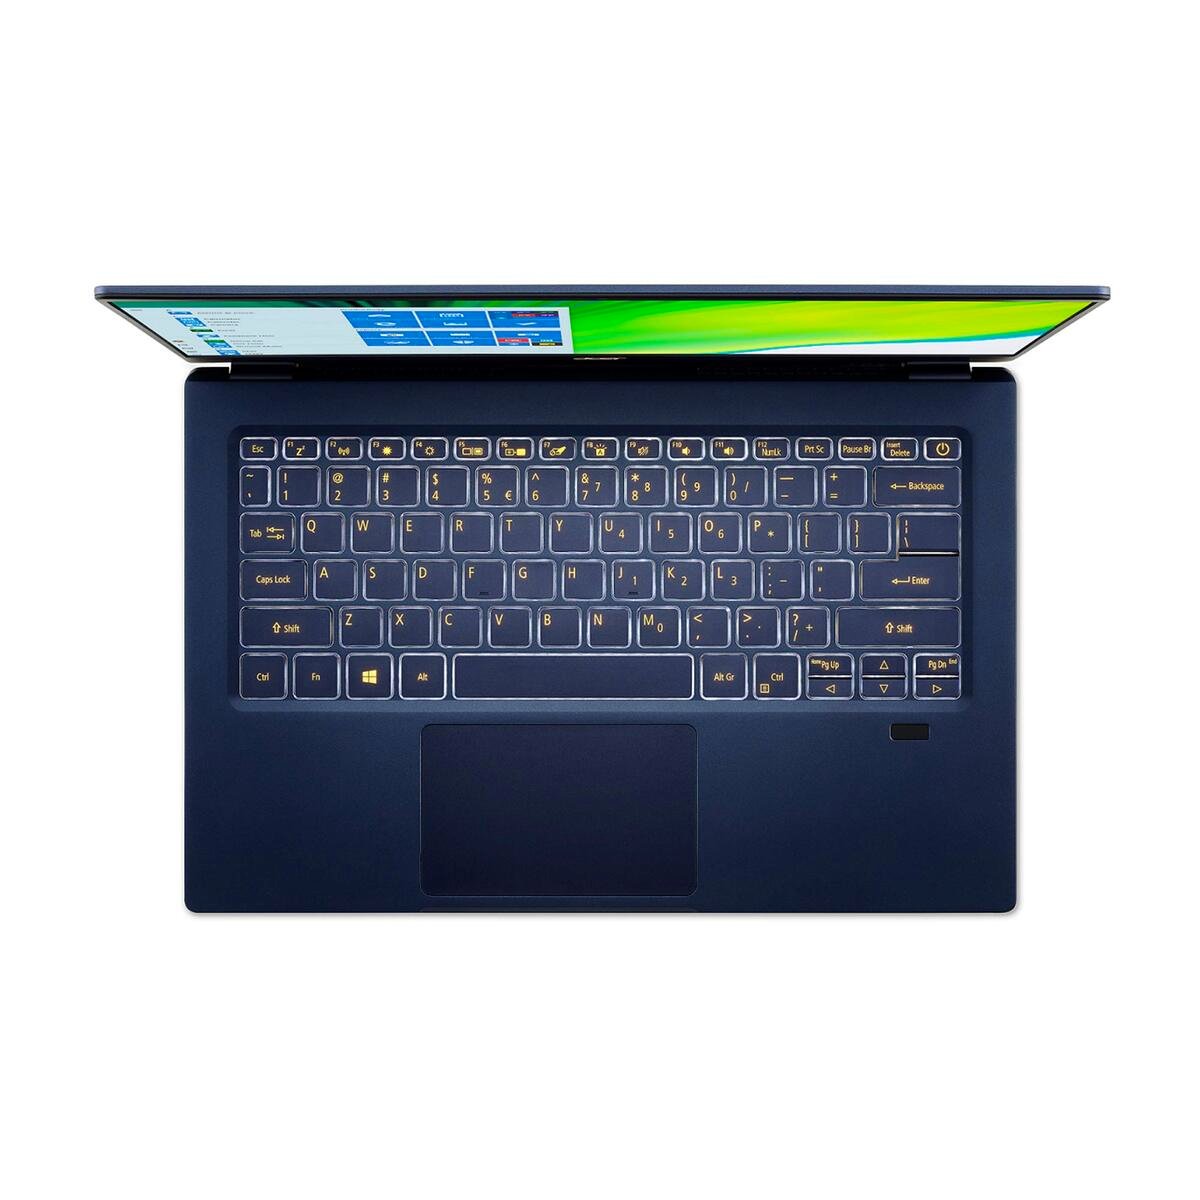 Acer Ultrabook SF514 NX.HHVEM.003, Intel Core i5-1035G1, 8GB RAM, 512GB SSD, 2GB Nvidia GeForce MX250, 14"FHD LED Display, Windows 10 Pro, Blue